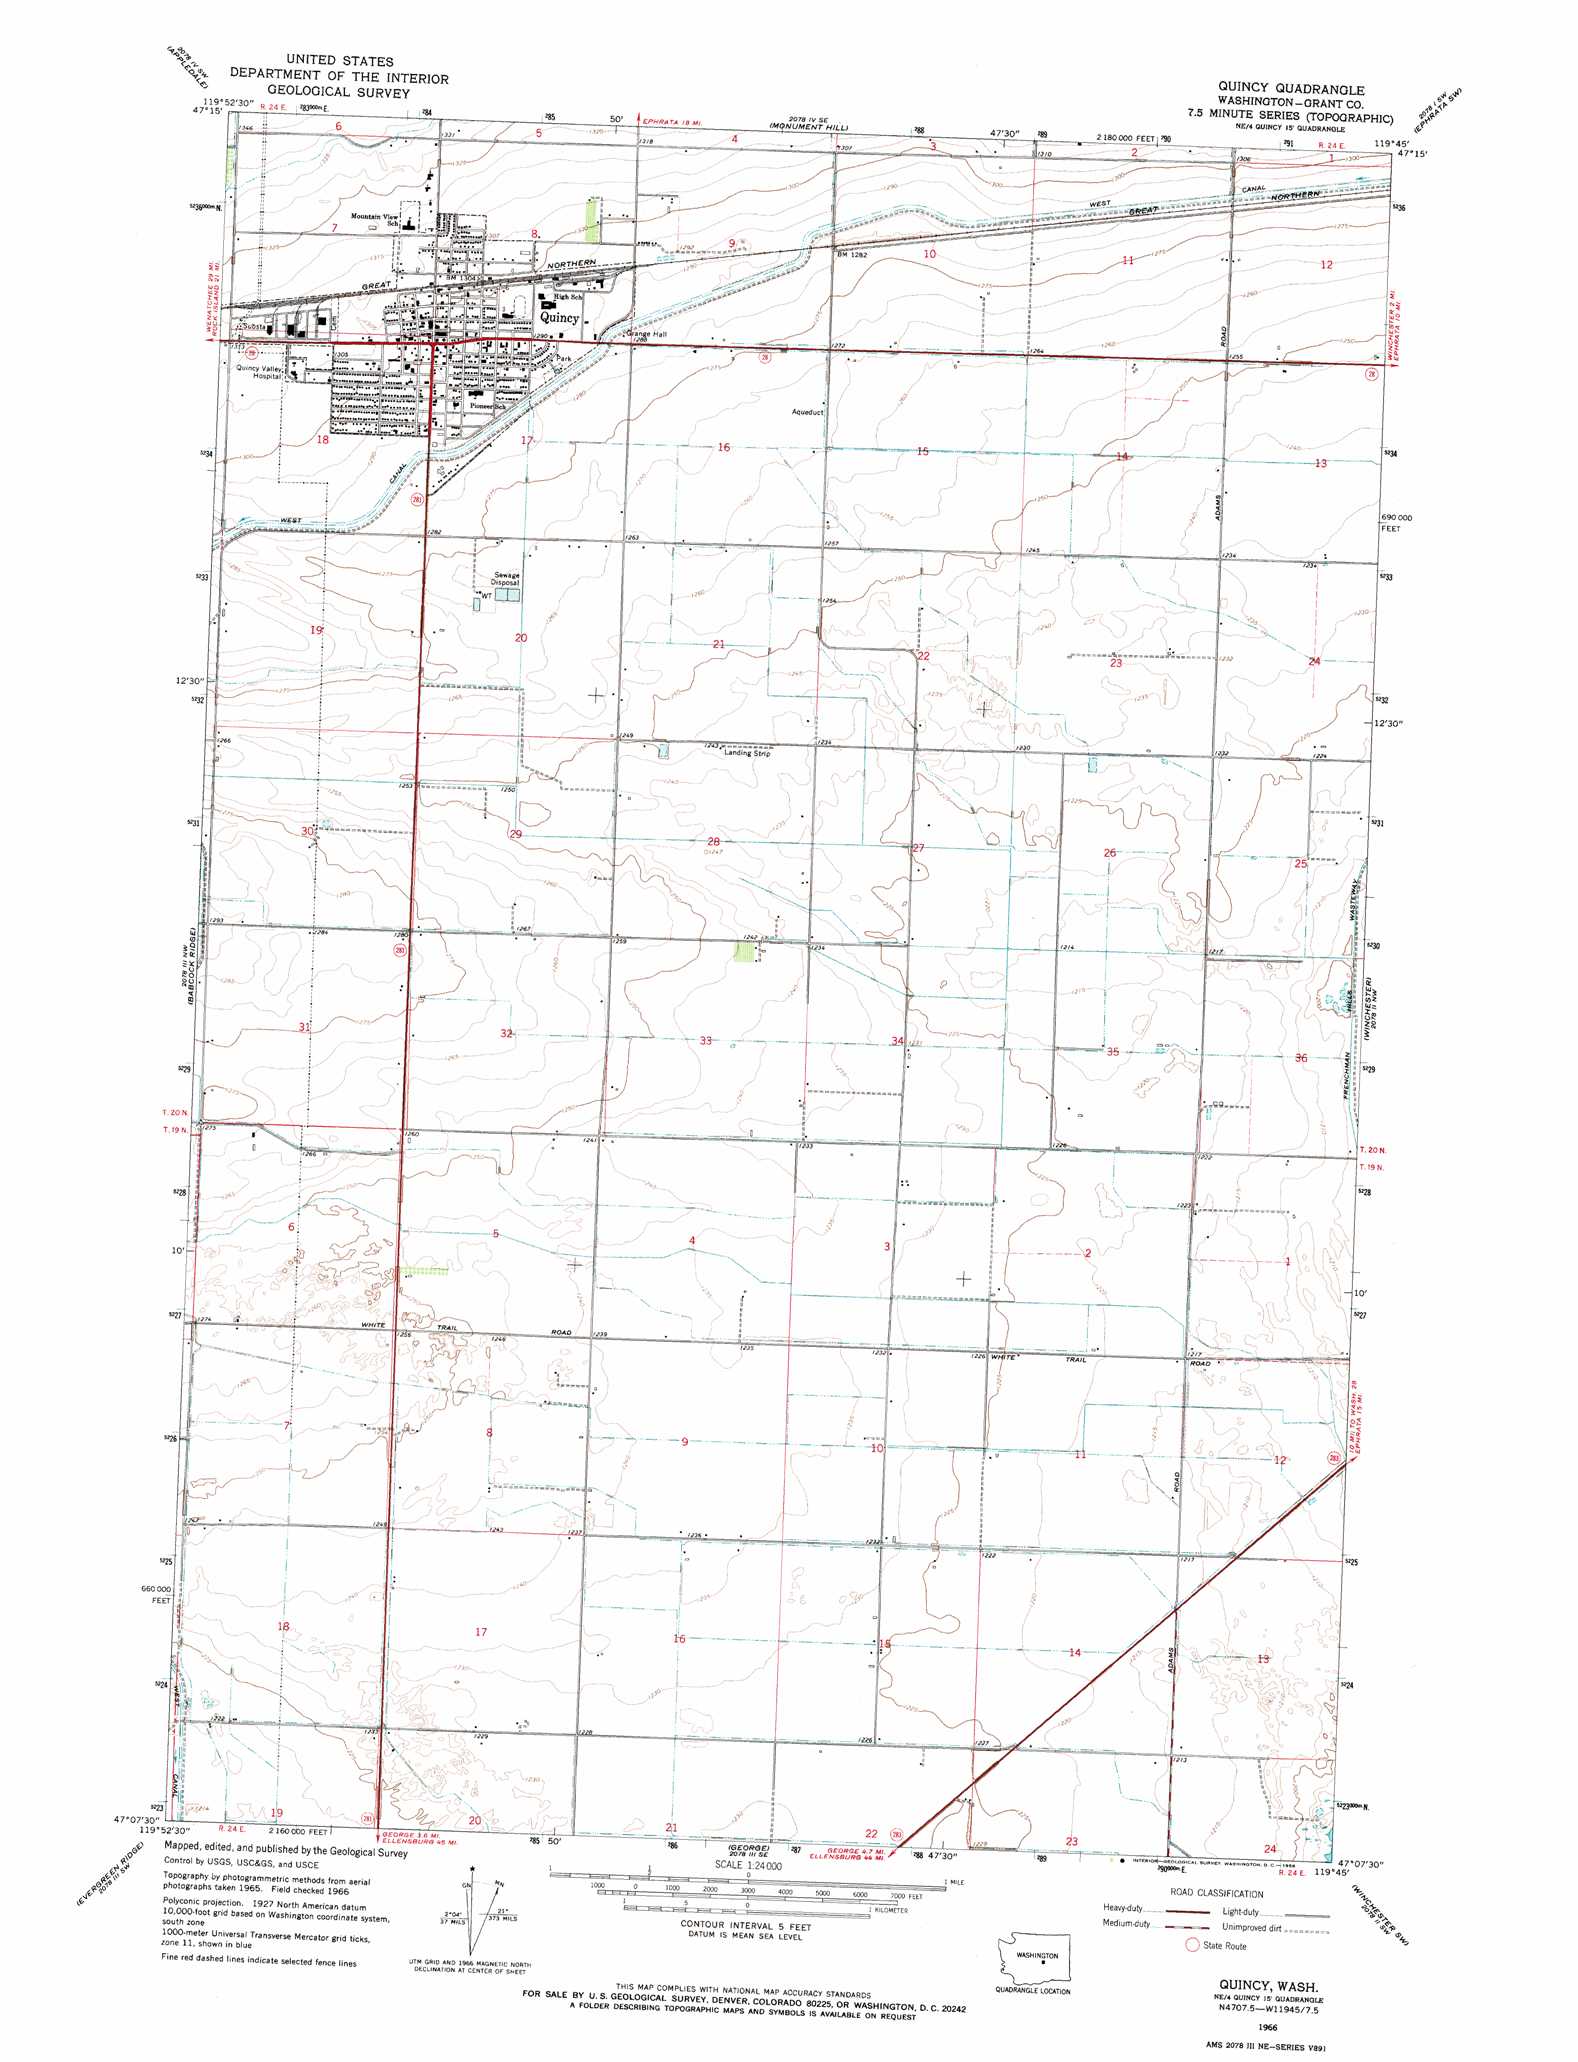 Quincy topographic map, WA - USGS Topo Quad 47119b7